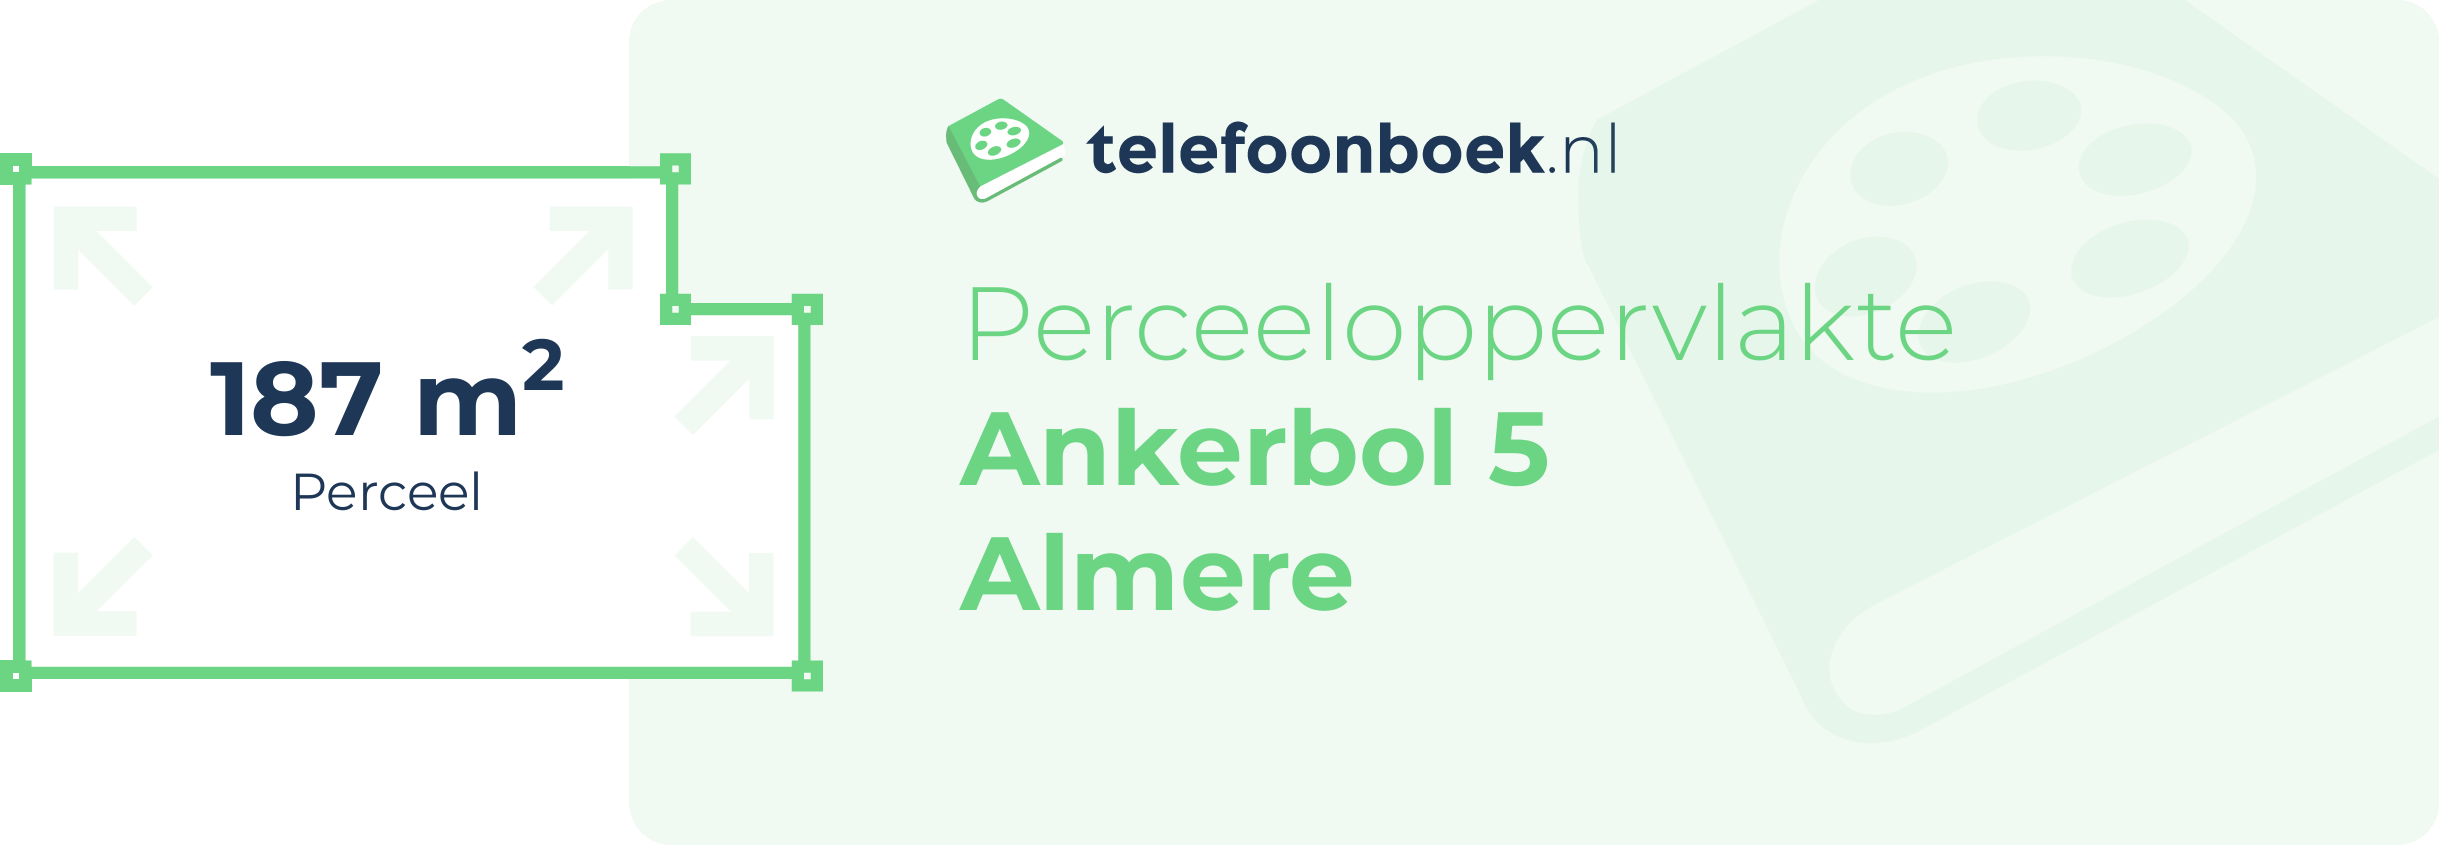 Perceeloppervlakte Ankerbol 5 Almere